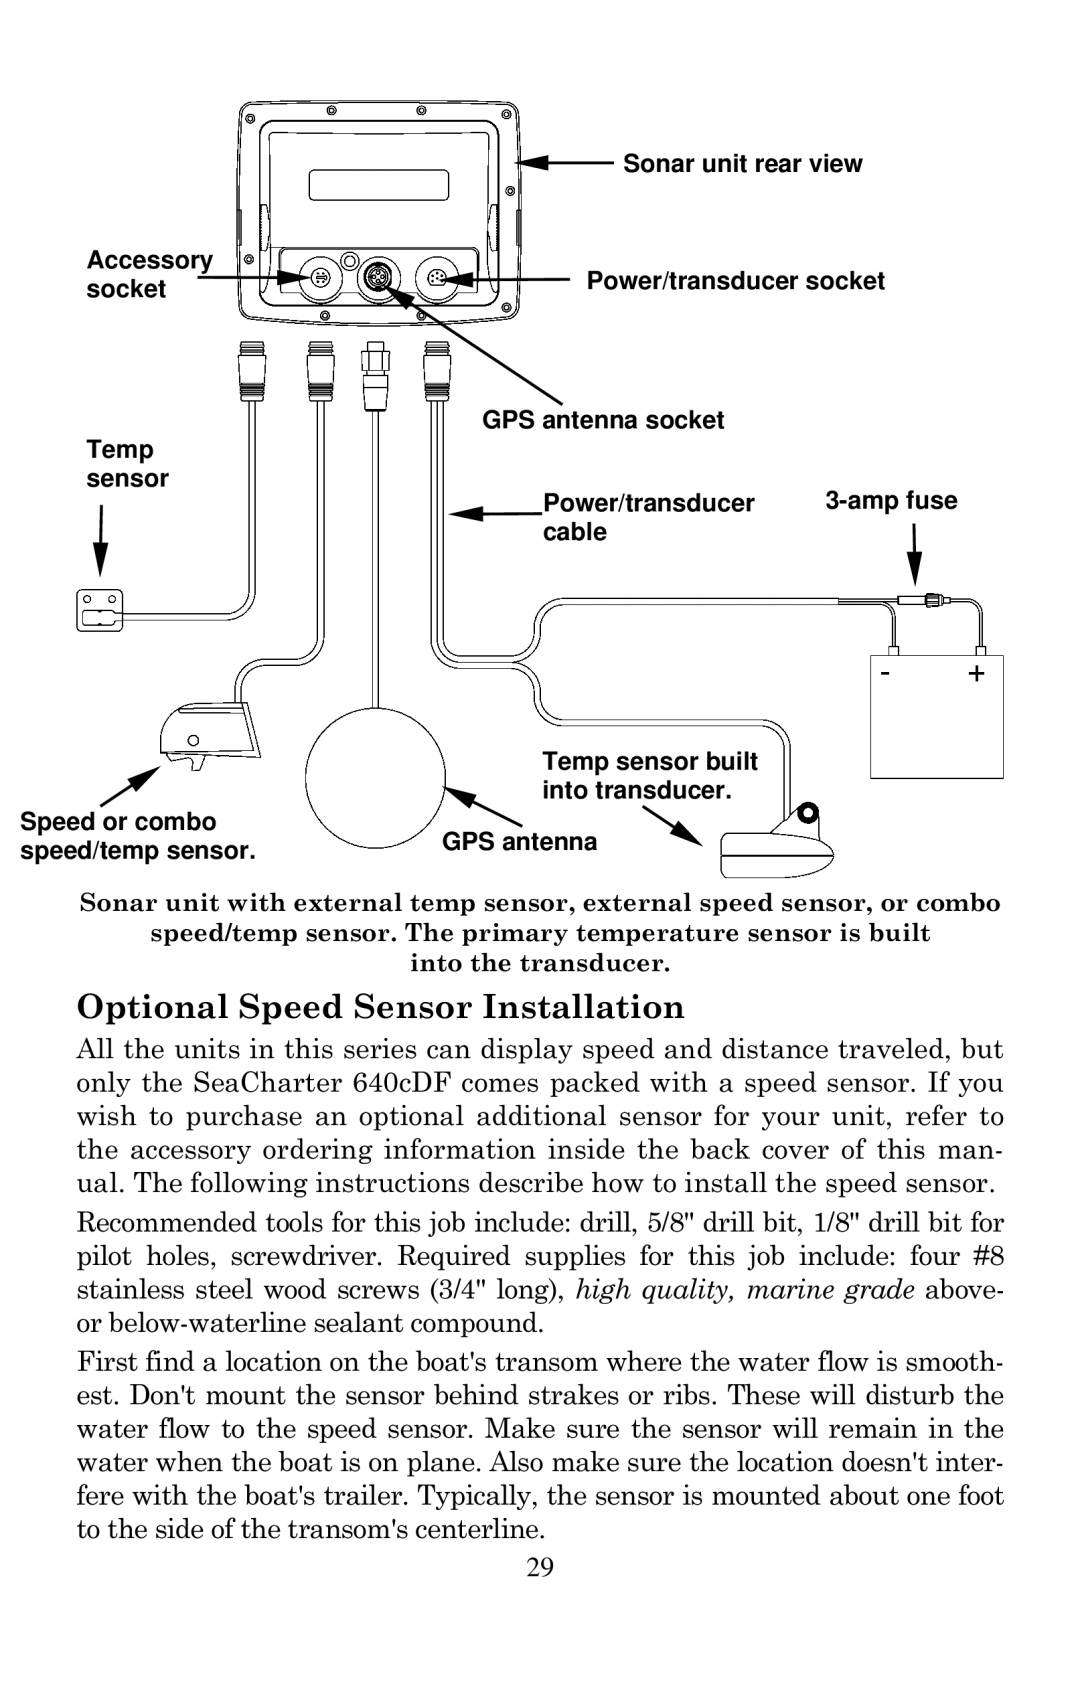 Eagle Electronics 640C, 640cDF manual Optional Speed Sensor Installation, Accessory Sonar unit rear view, Socket 